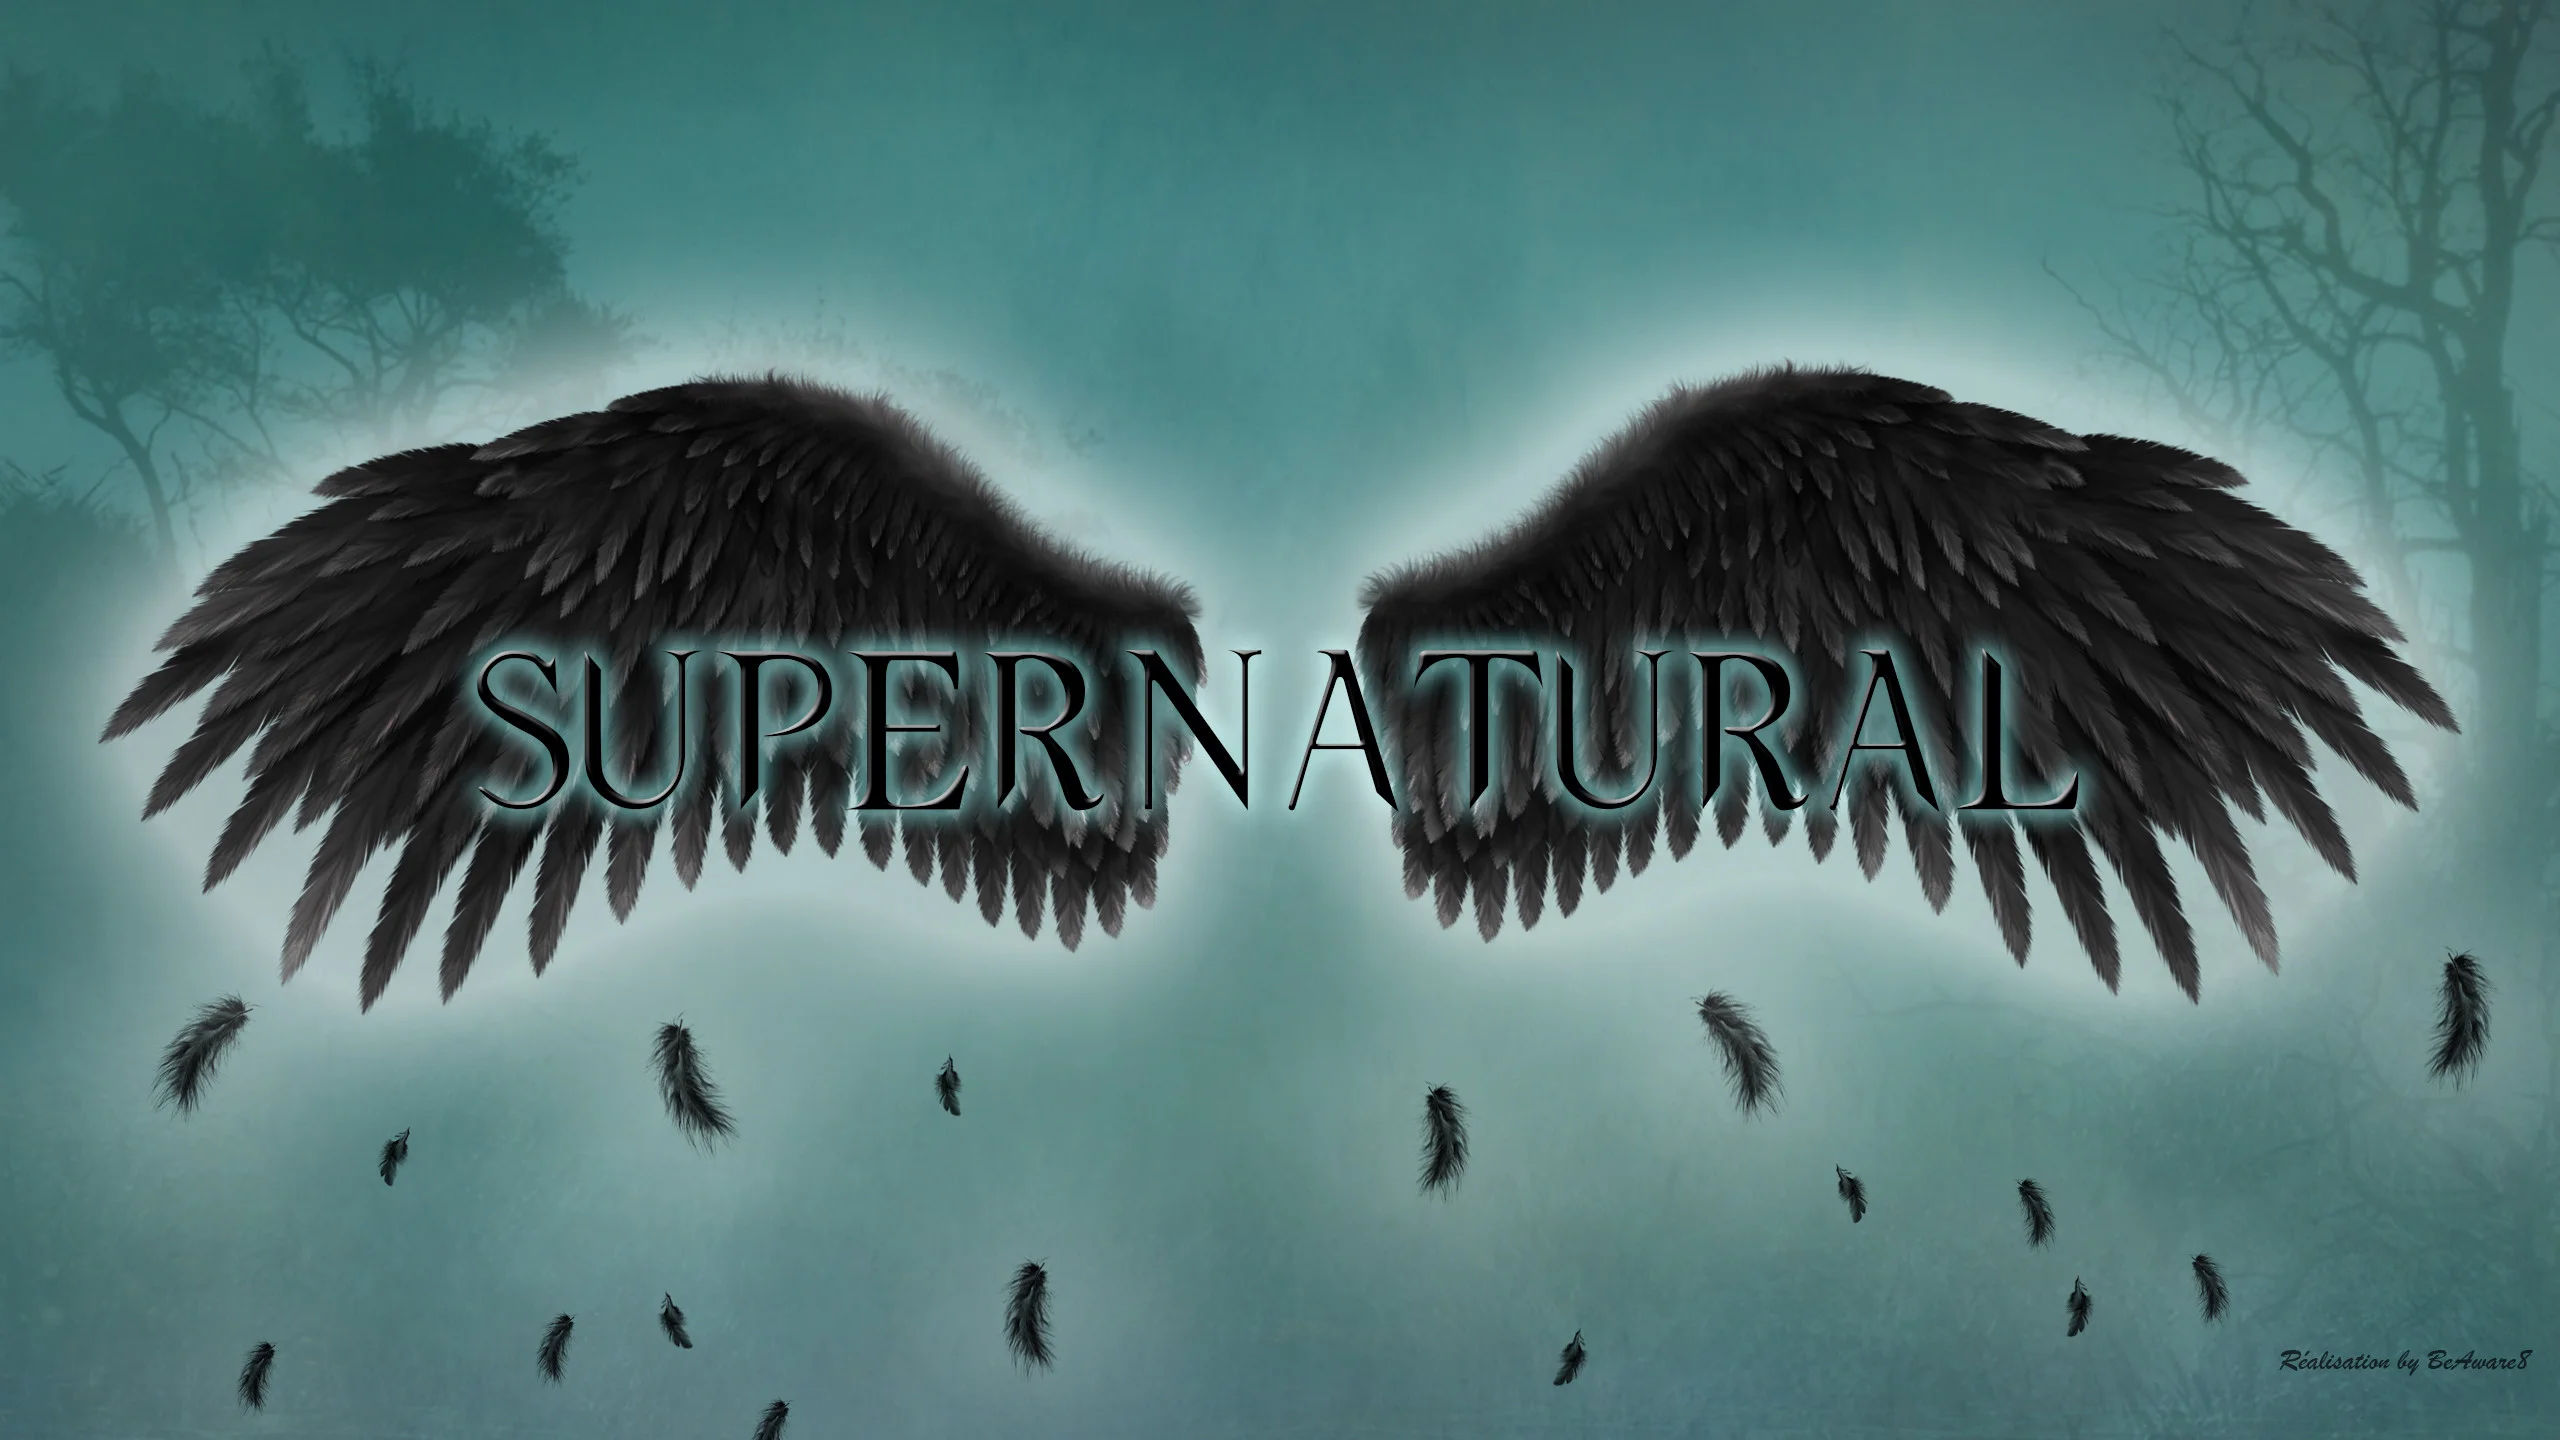 Supernatural – the fallen angel wings by BeAware8